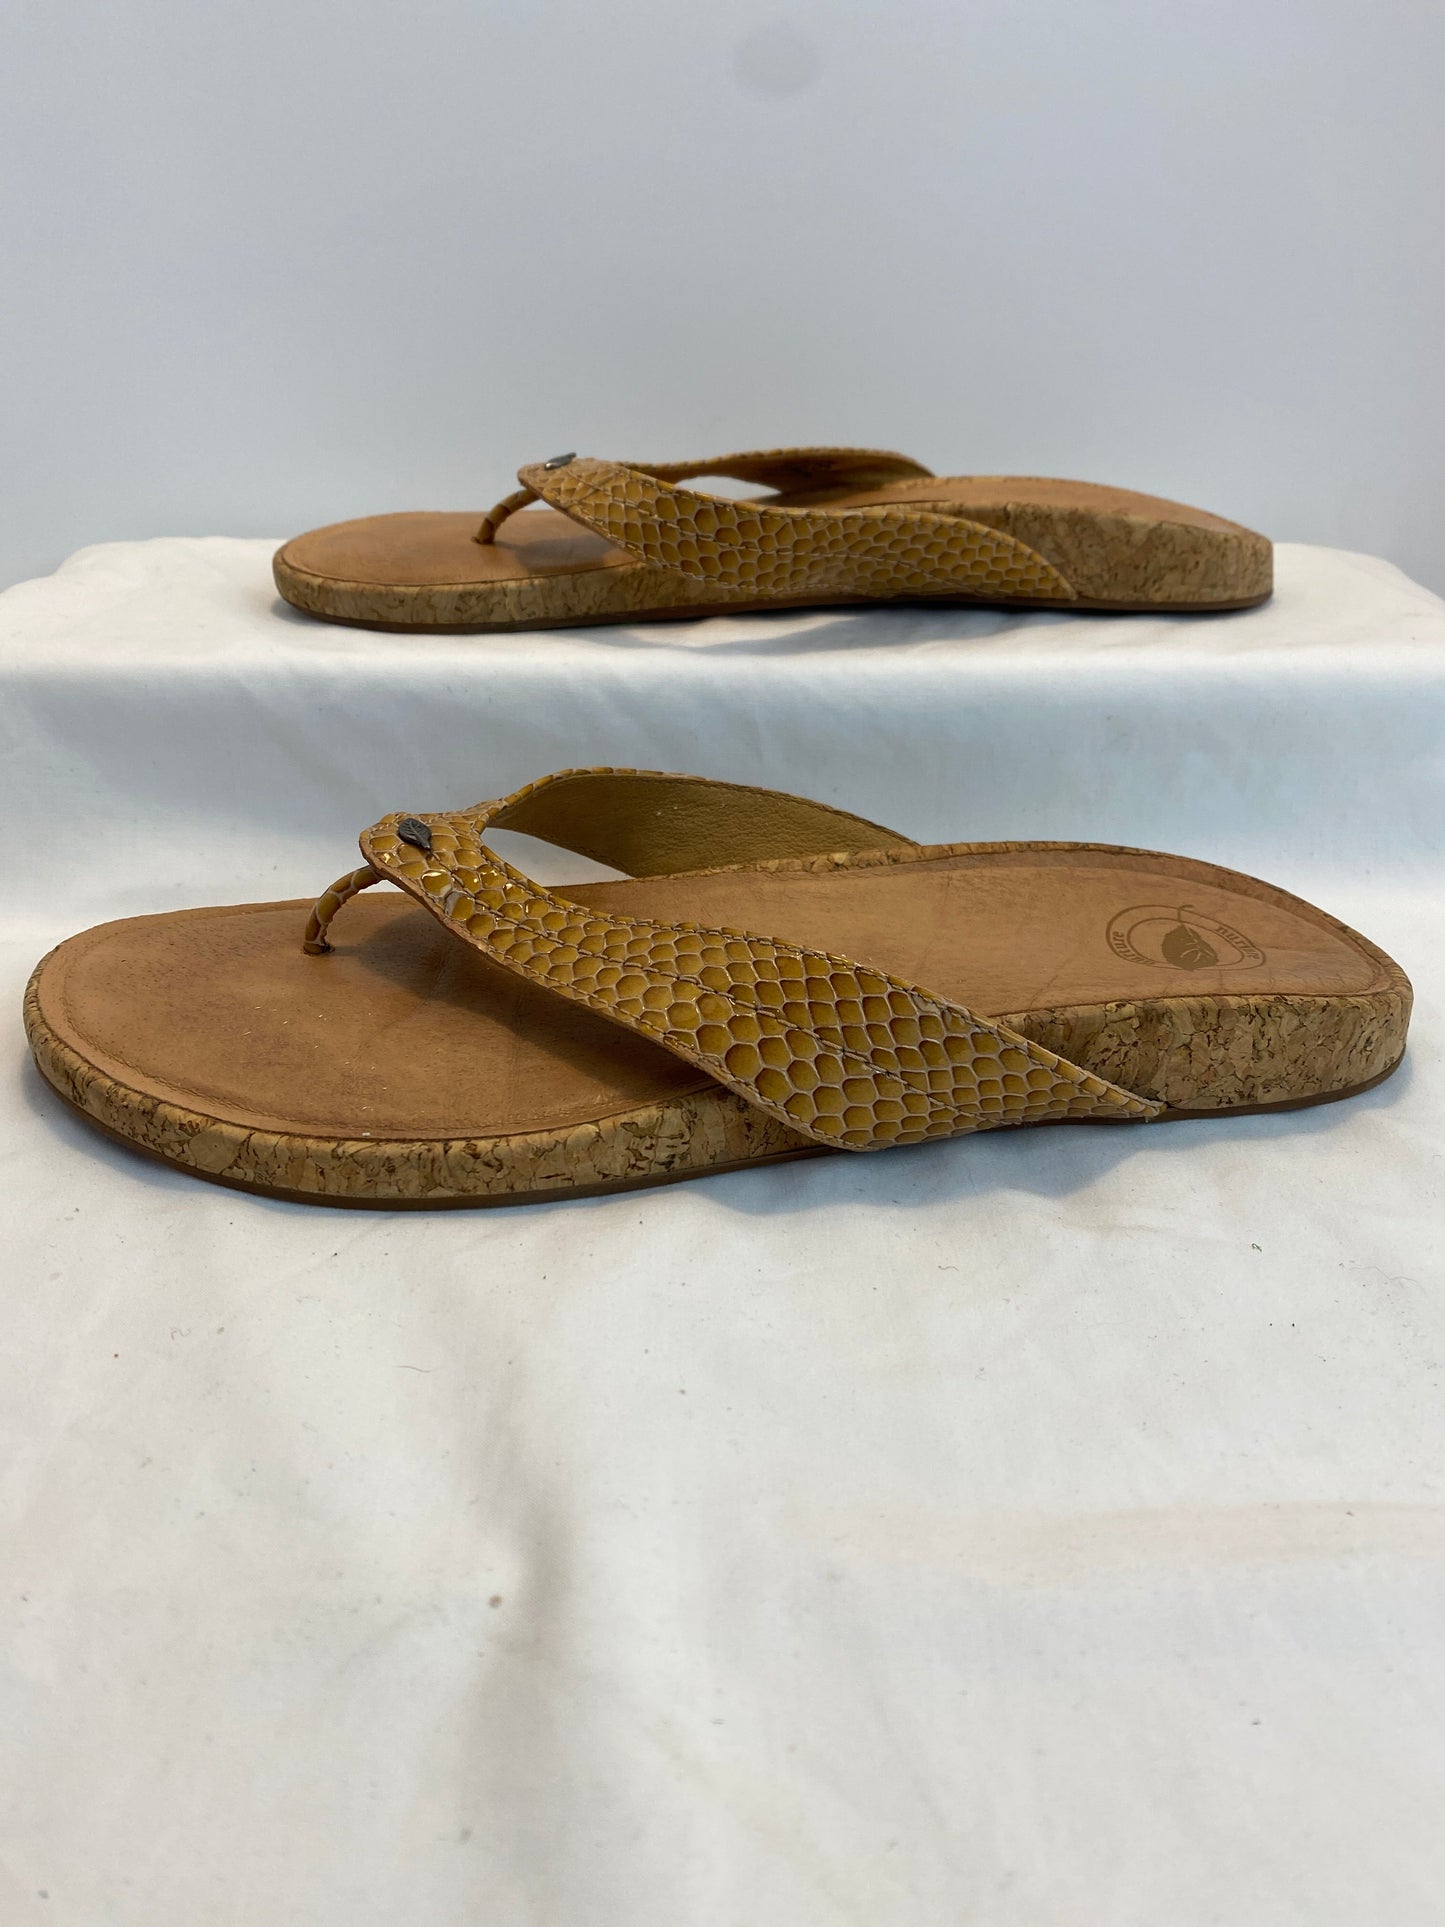 Sandals Flip Flops By Clothes Mentor  Size: 9